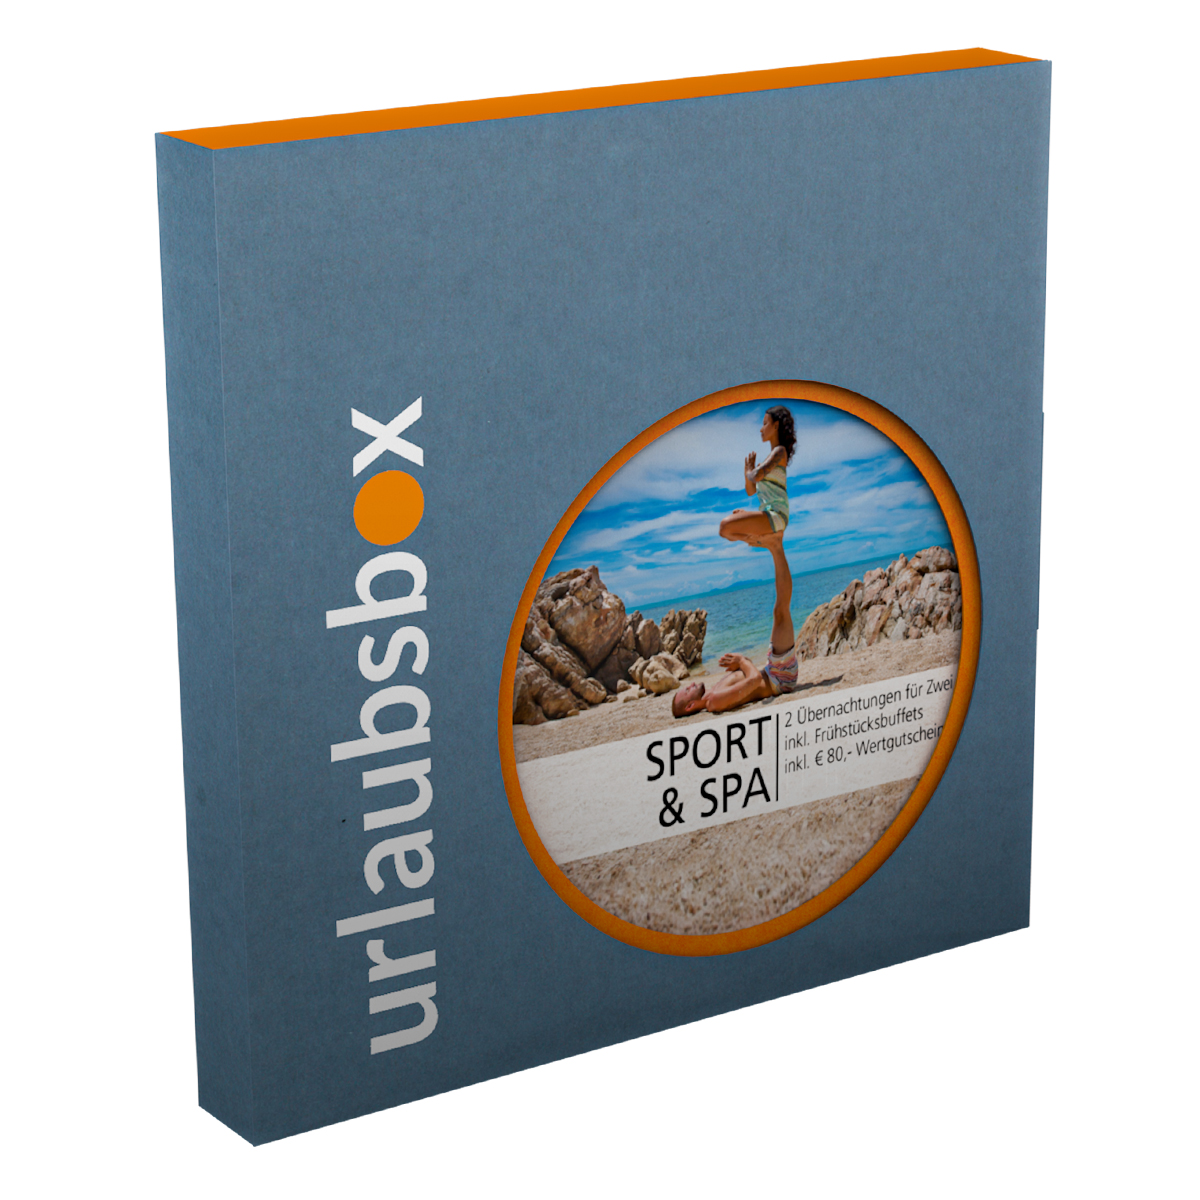 Sport & Spa - Hotelgutschein Deluxe 3302 - 1